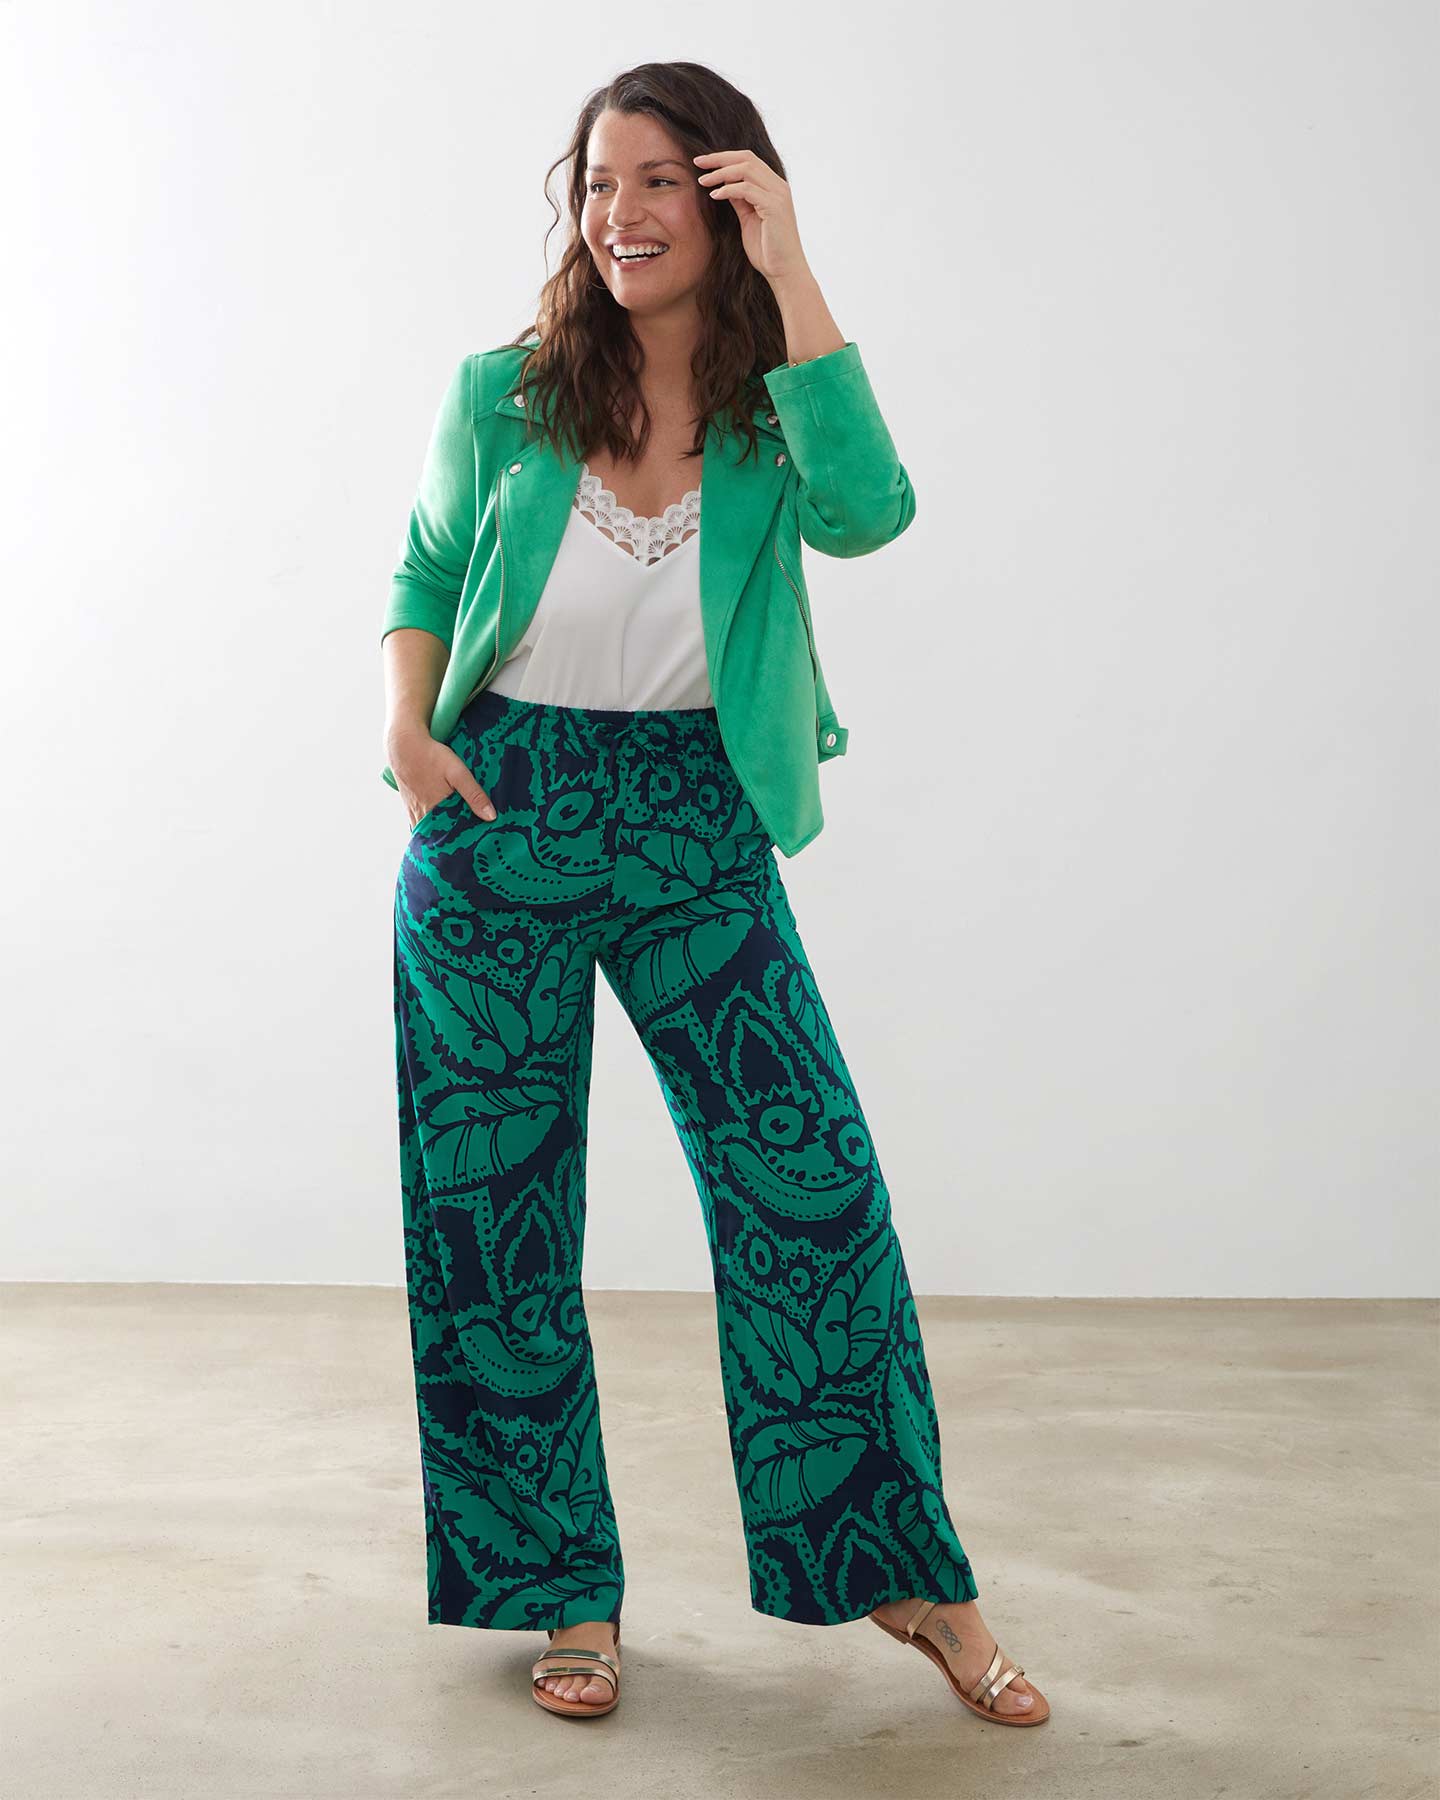 Buy Green Trousers  Pants for Women by WUXI Online  Ajiocom